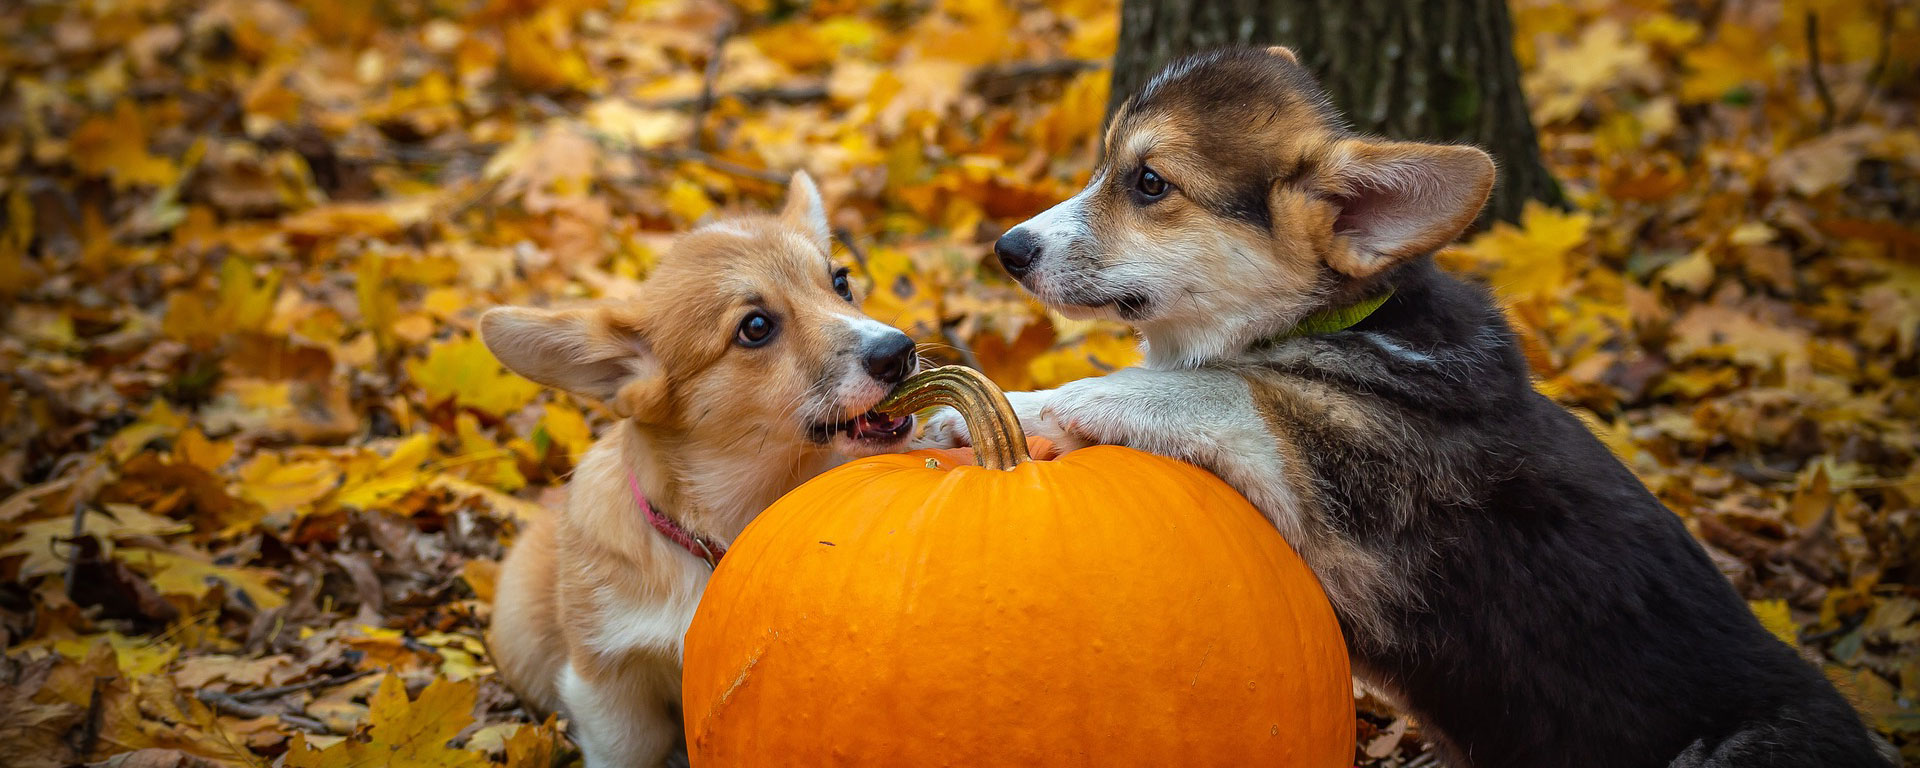 Corgi puppies playing with a pumpkin